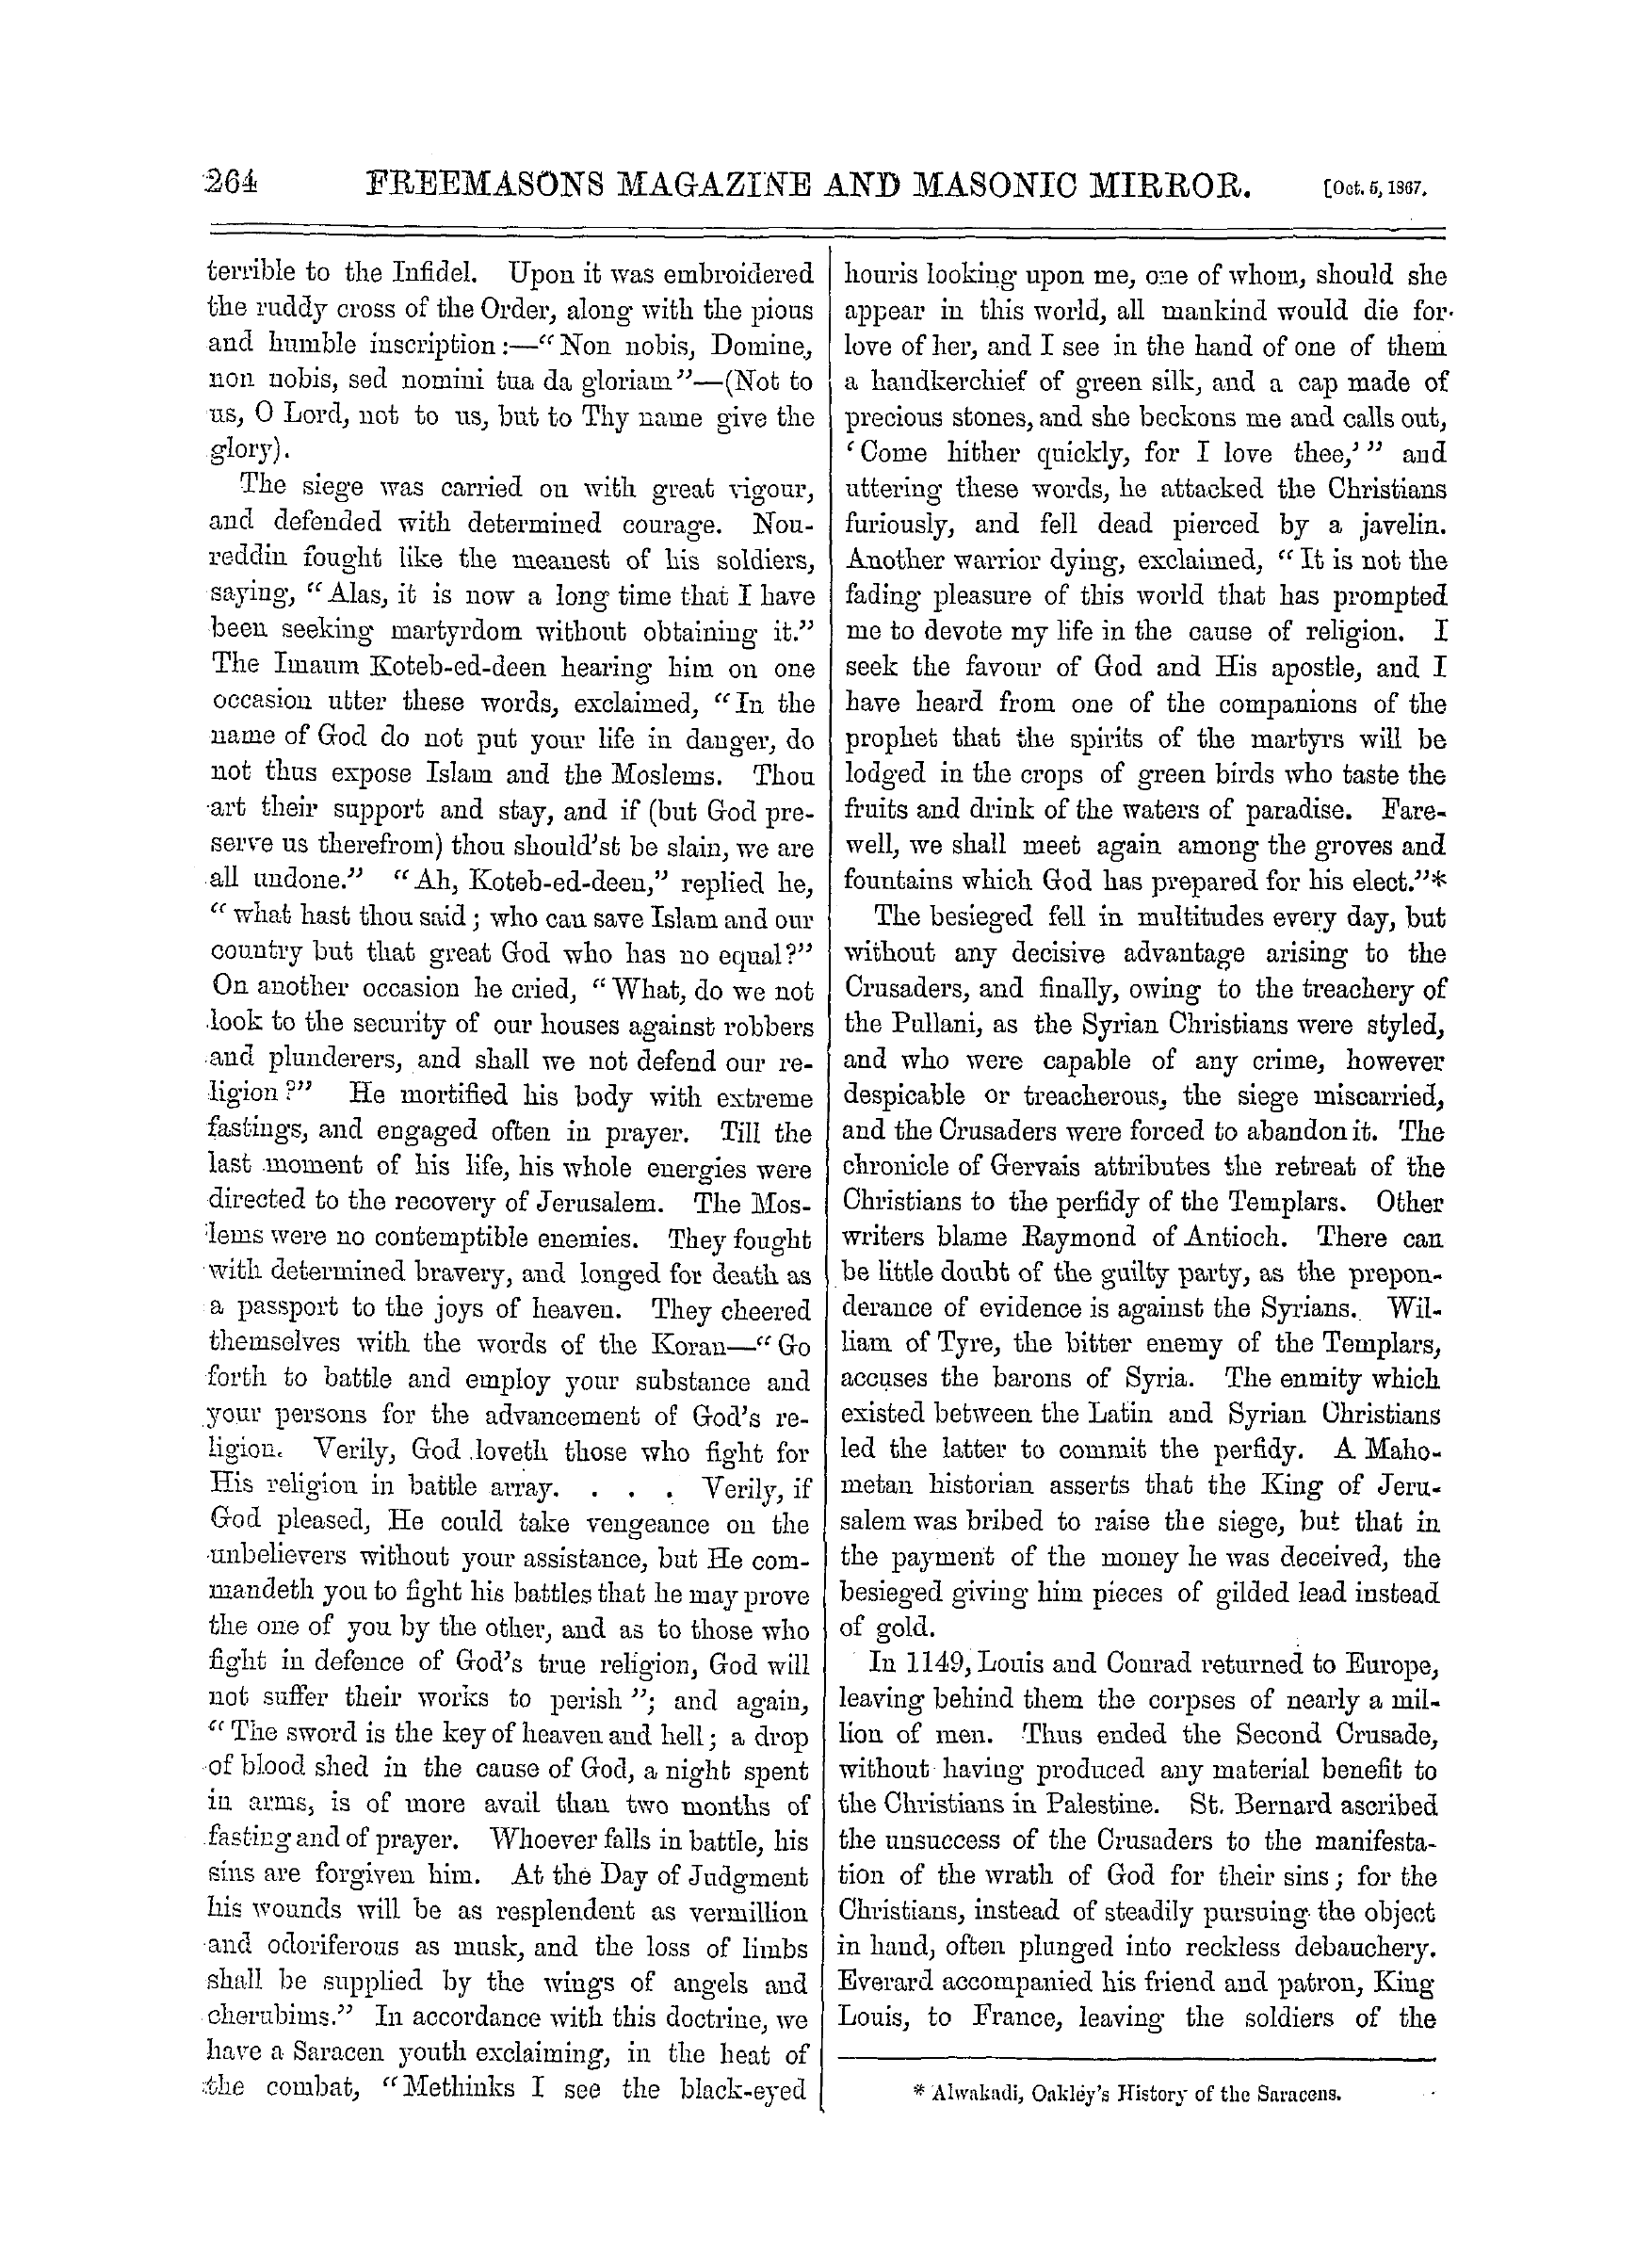 The Freemasons' Monthly Magazine: 1867-10-05 - The Knights Templars.